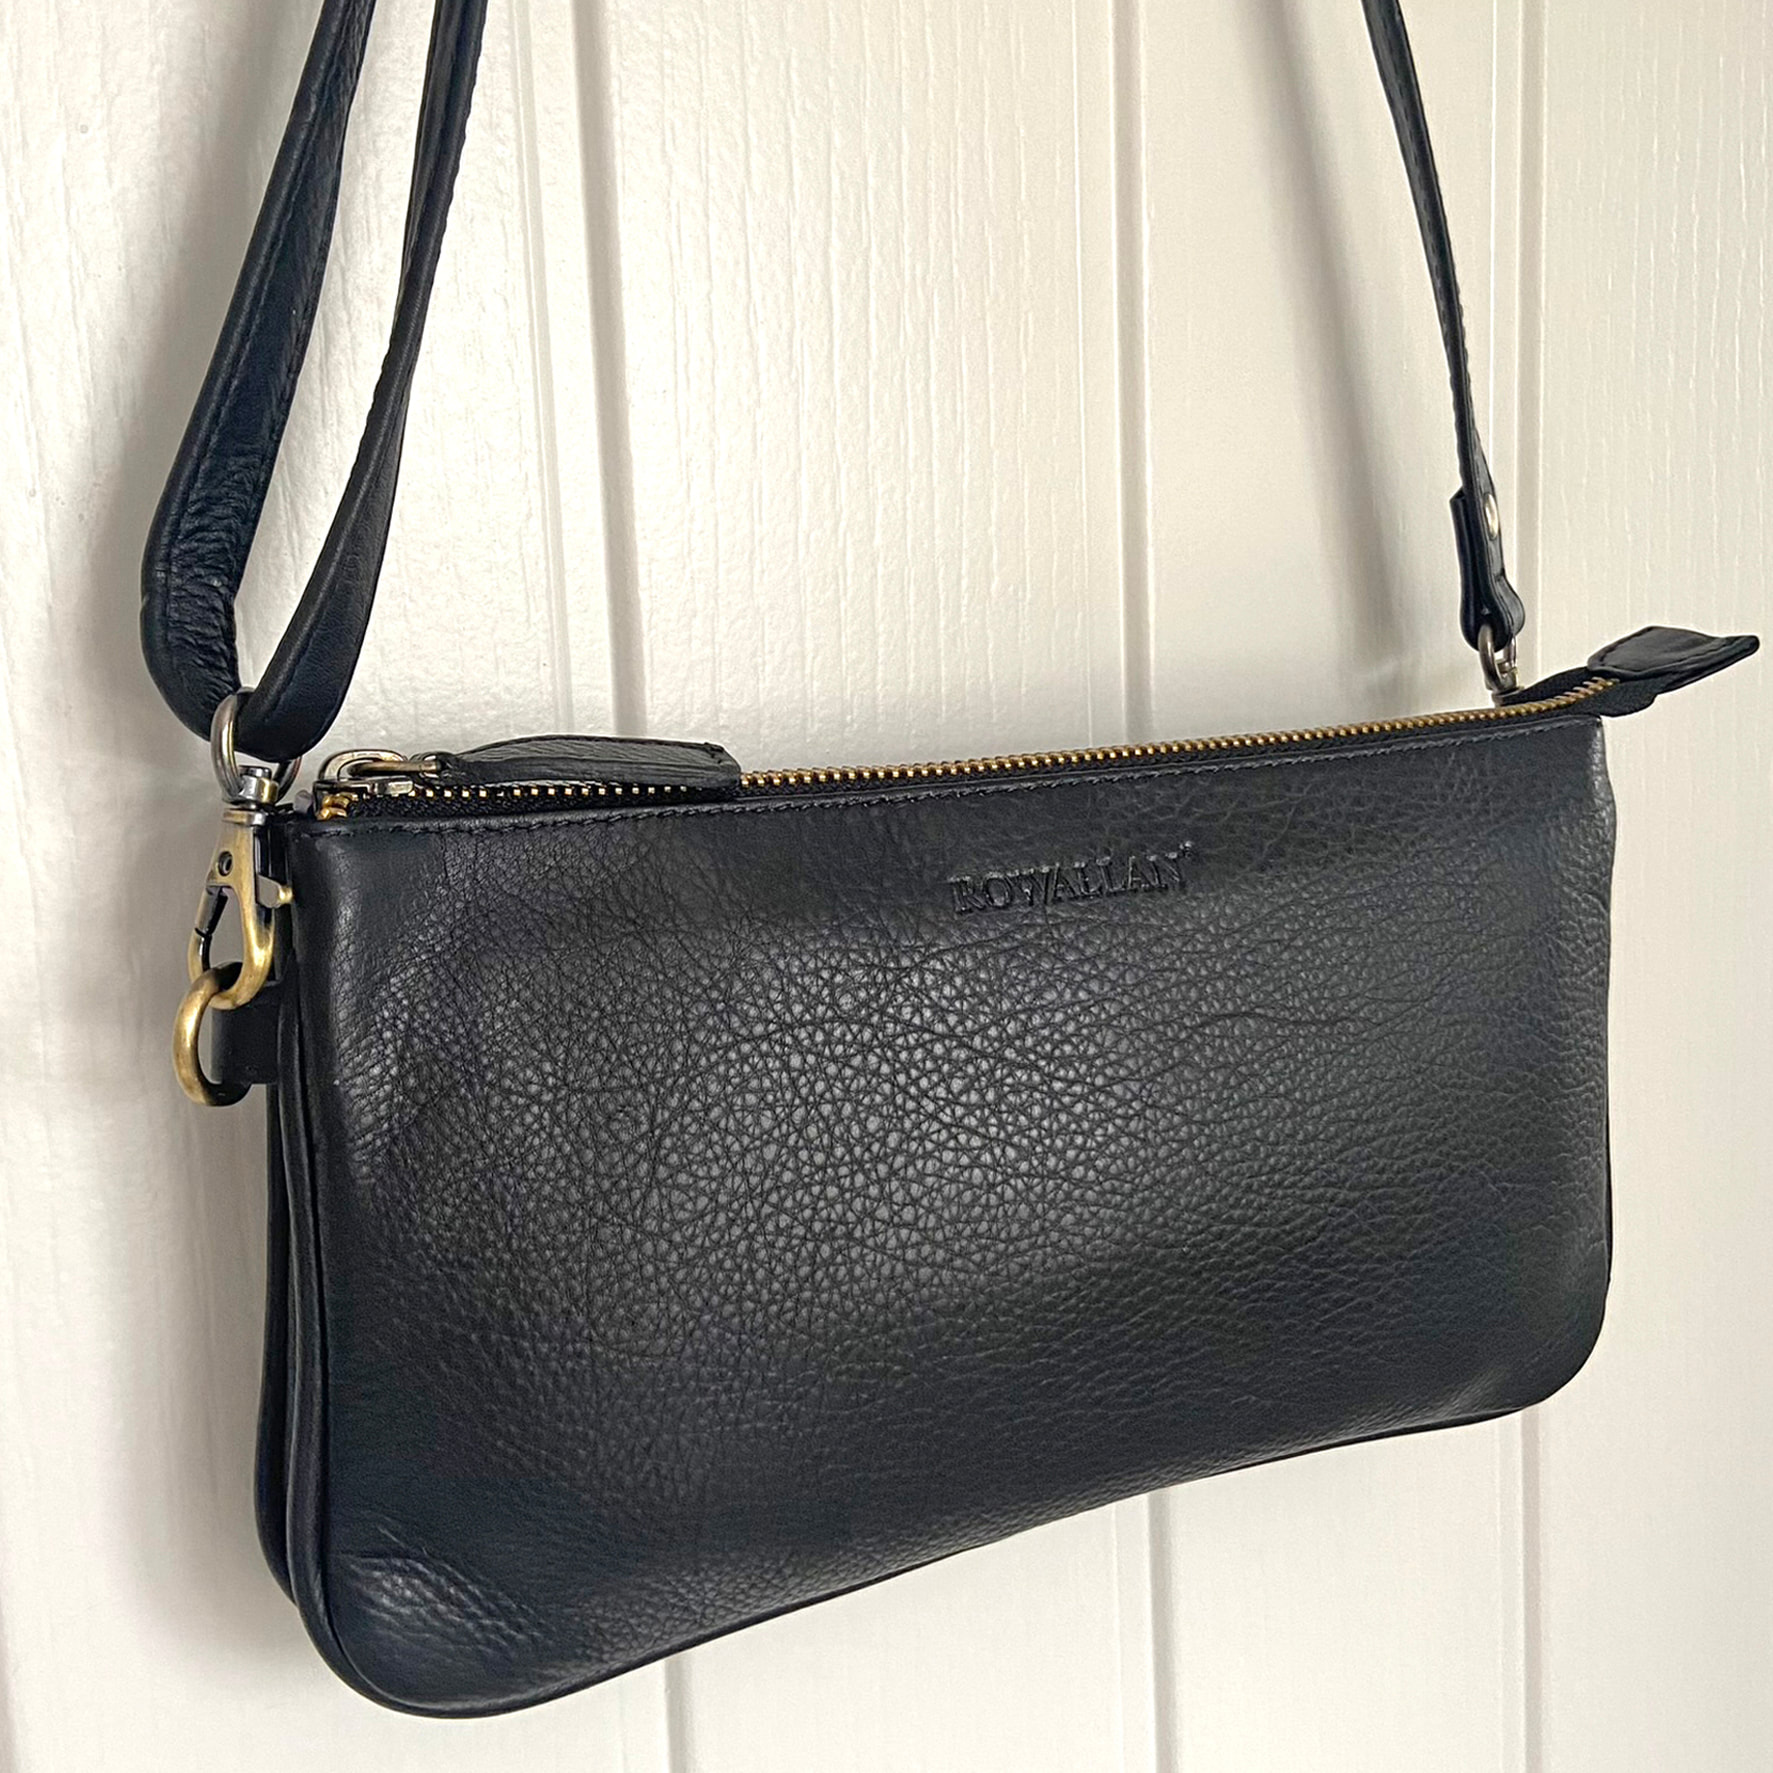 Leather women handbag shoulder bag luxury bag purse black women tote